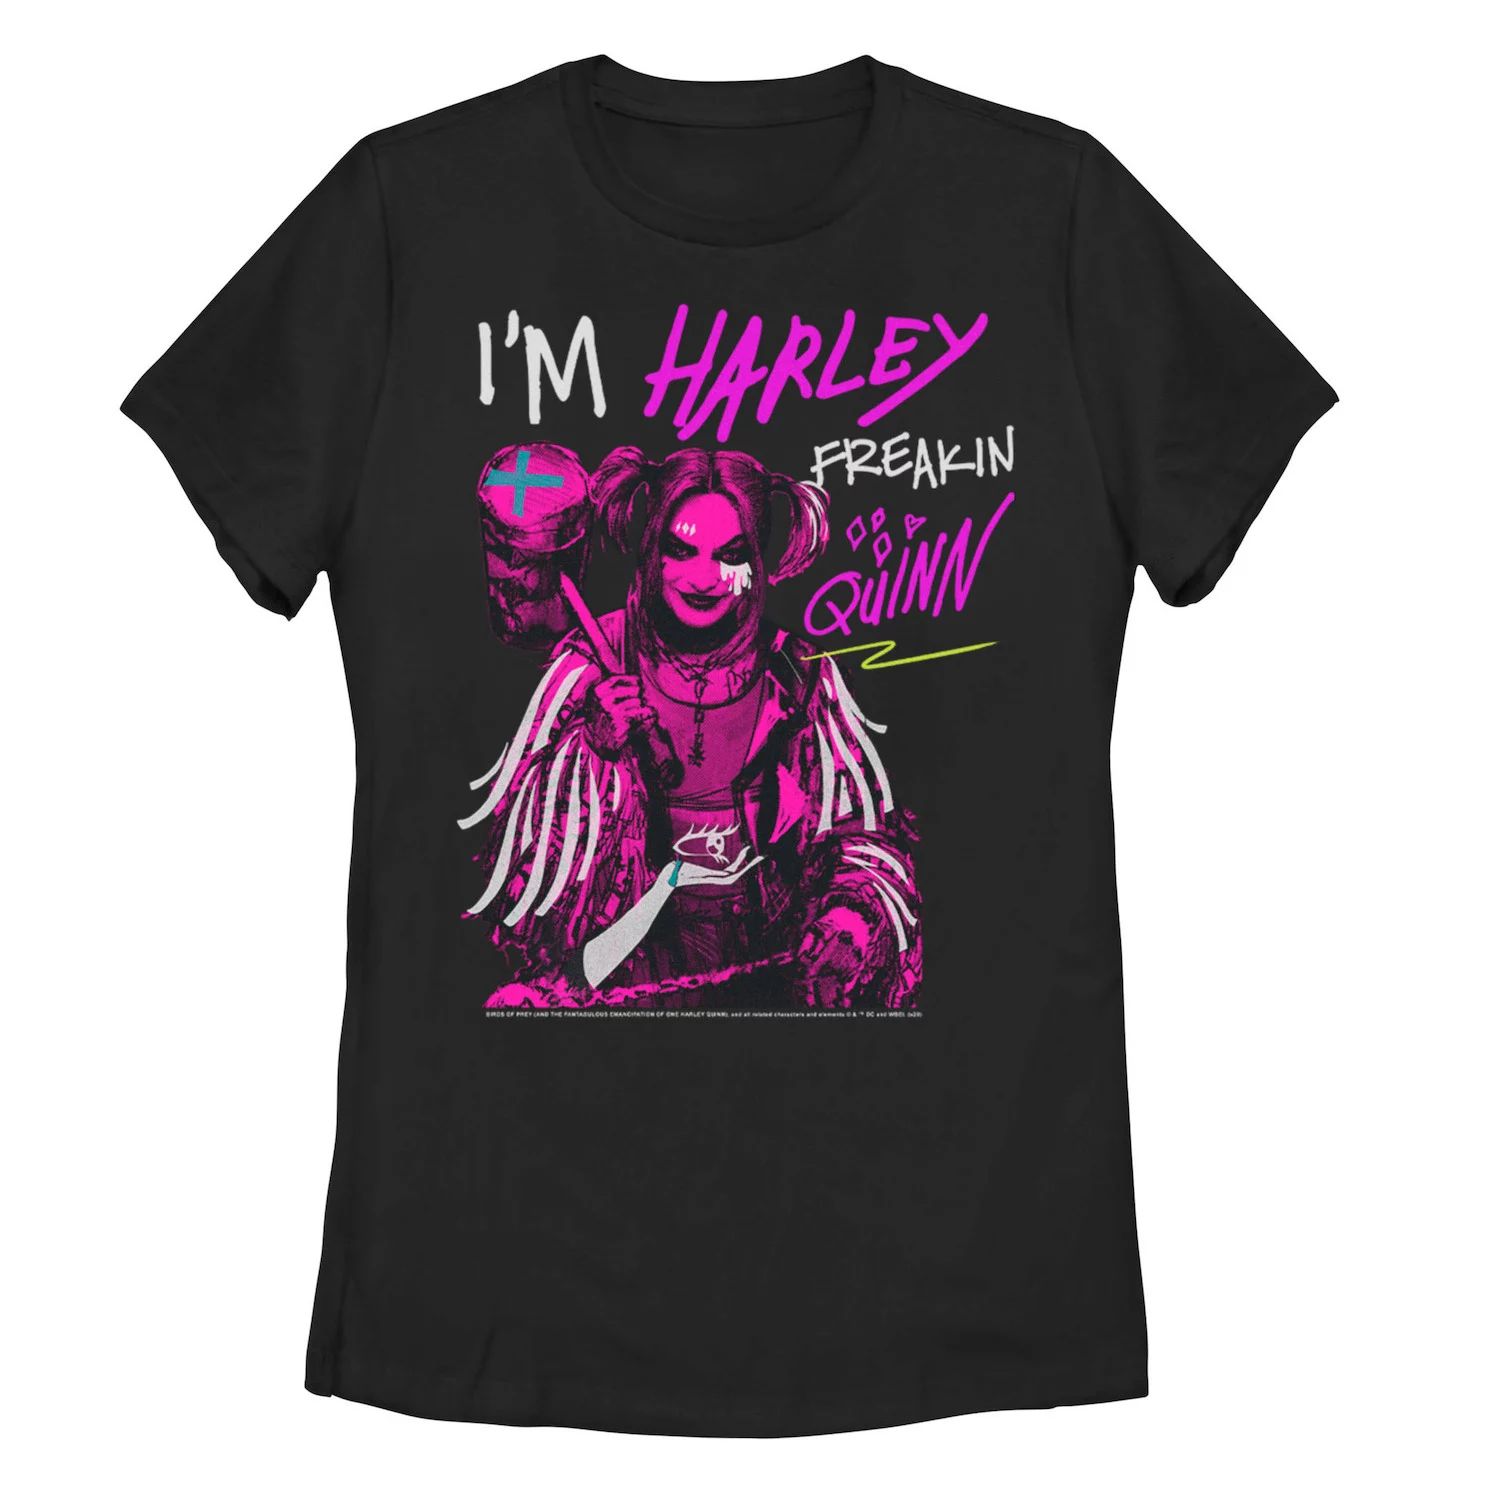 Футболка Harley Quinn: Birds Of Prey для юниоров с надписью «Я Harley Freakin' Quinn» Licensed Character мужская майка birds of prey i m harley freakin quinn dc comics